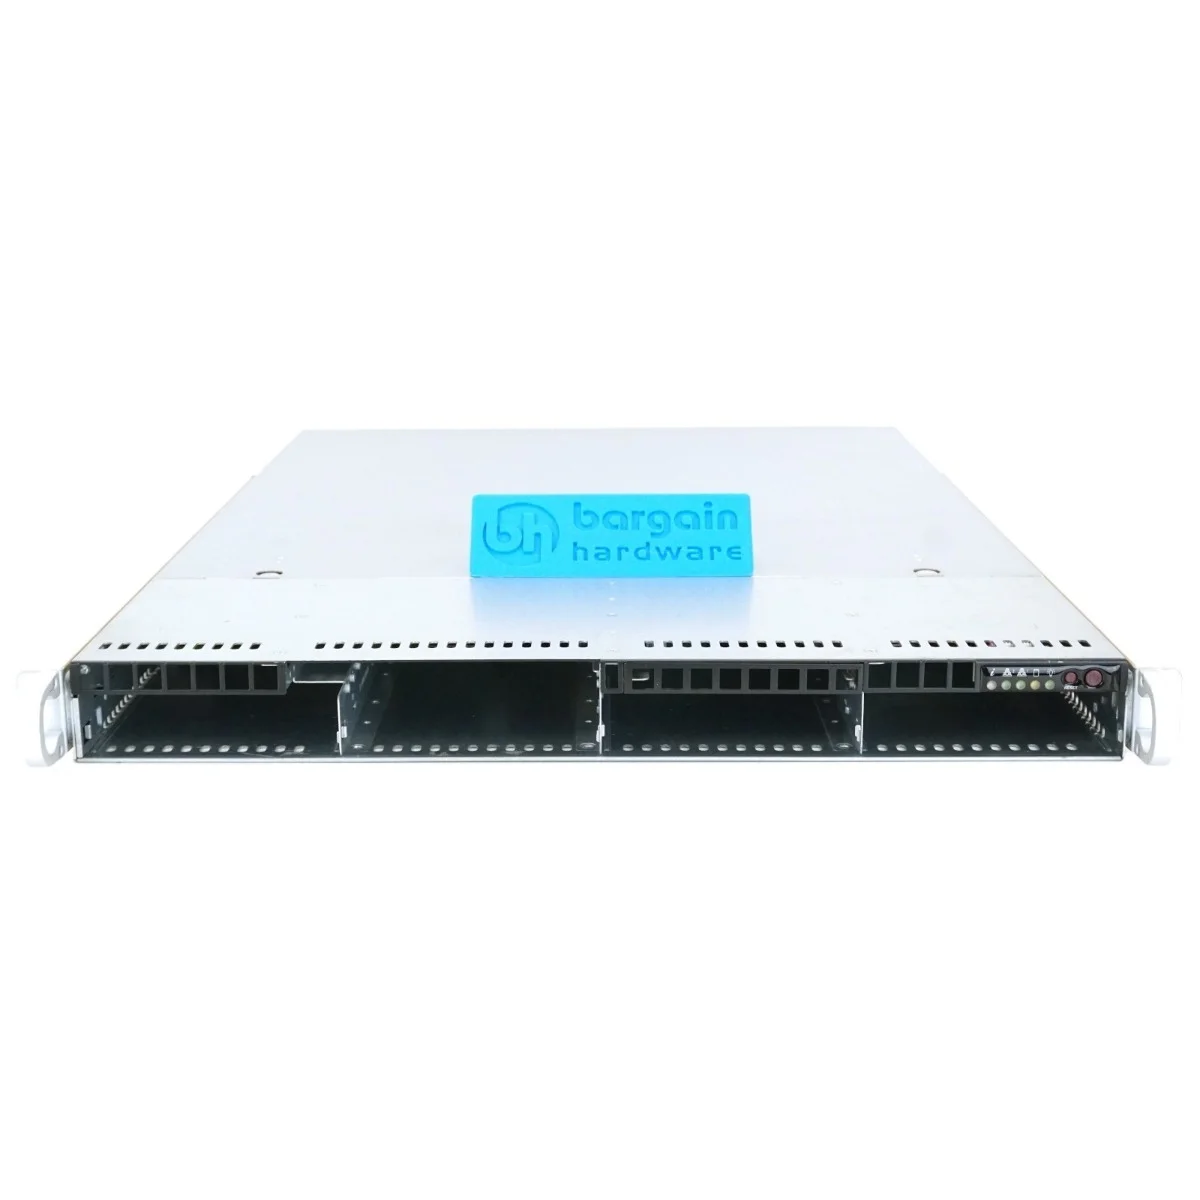 SuperMicro CSE-819-7 X9DRW-3LN4F+ 1U Rack Server